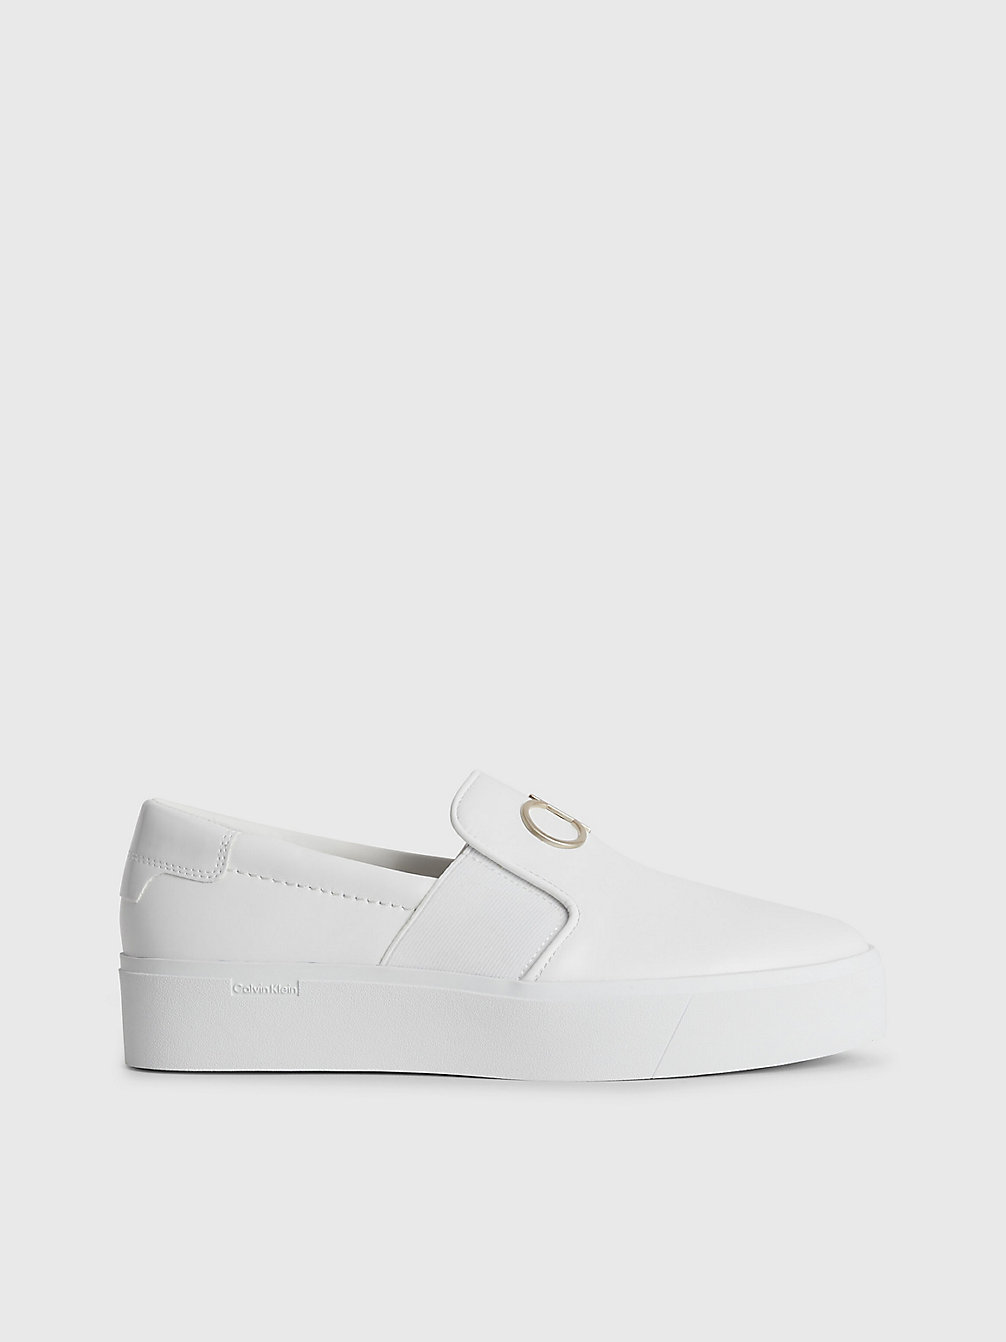 Zapatos Slip-On De Piel Con Plataforma > BRIGHT WHITE > undefined mujer > Calvin Klein